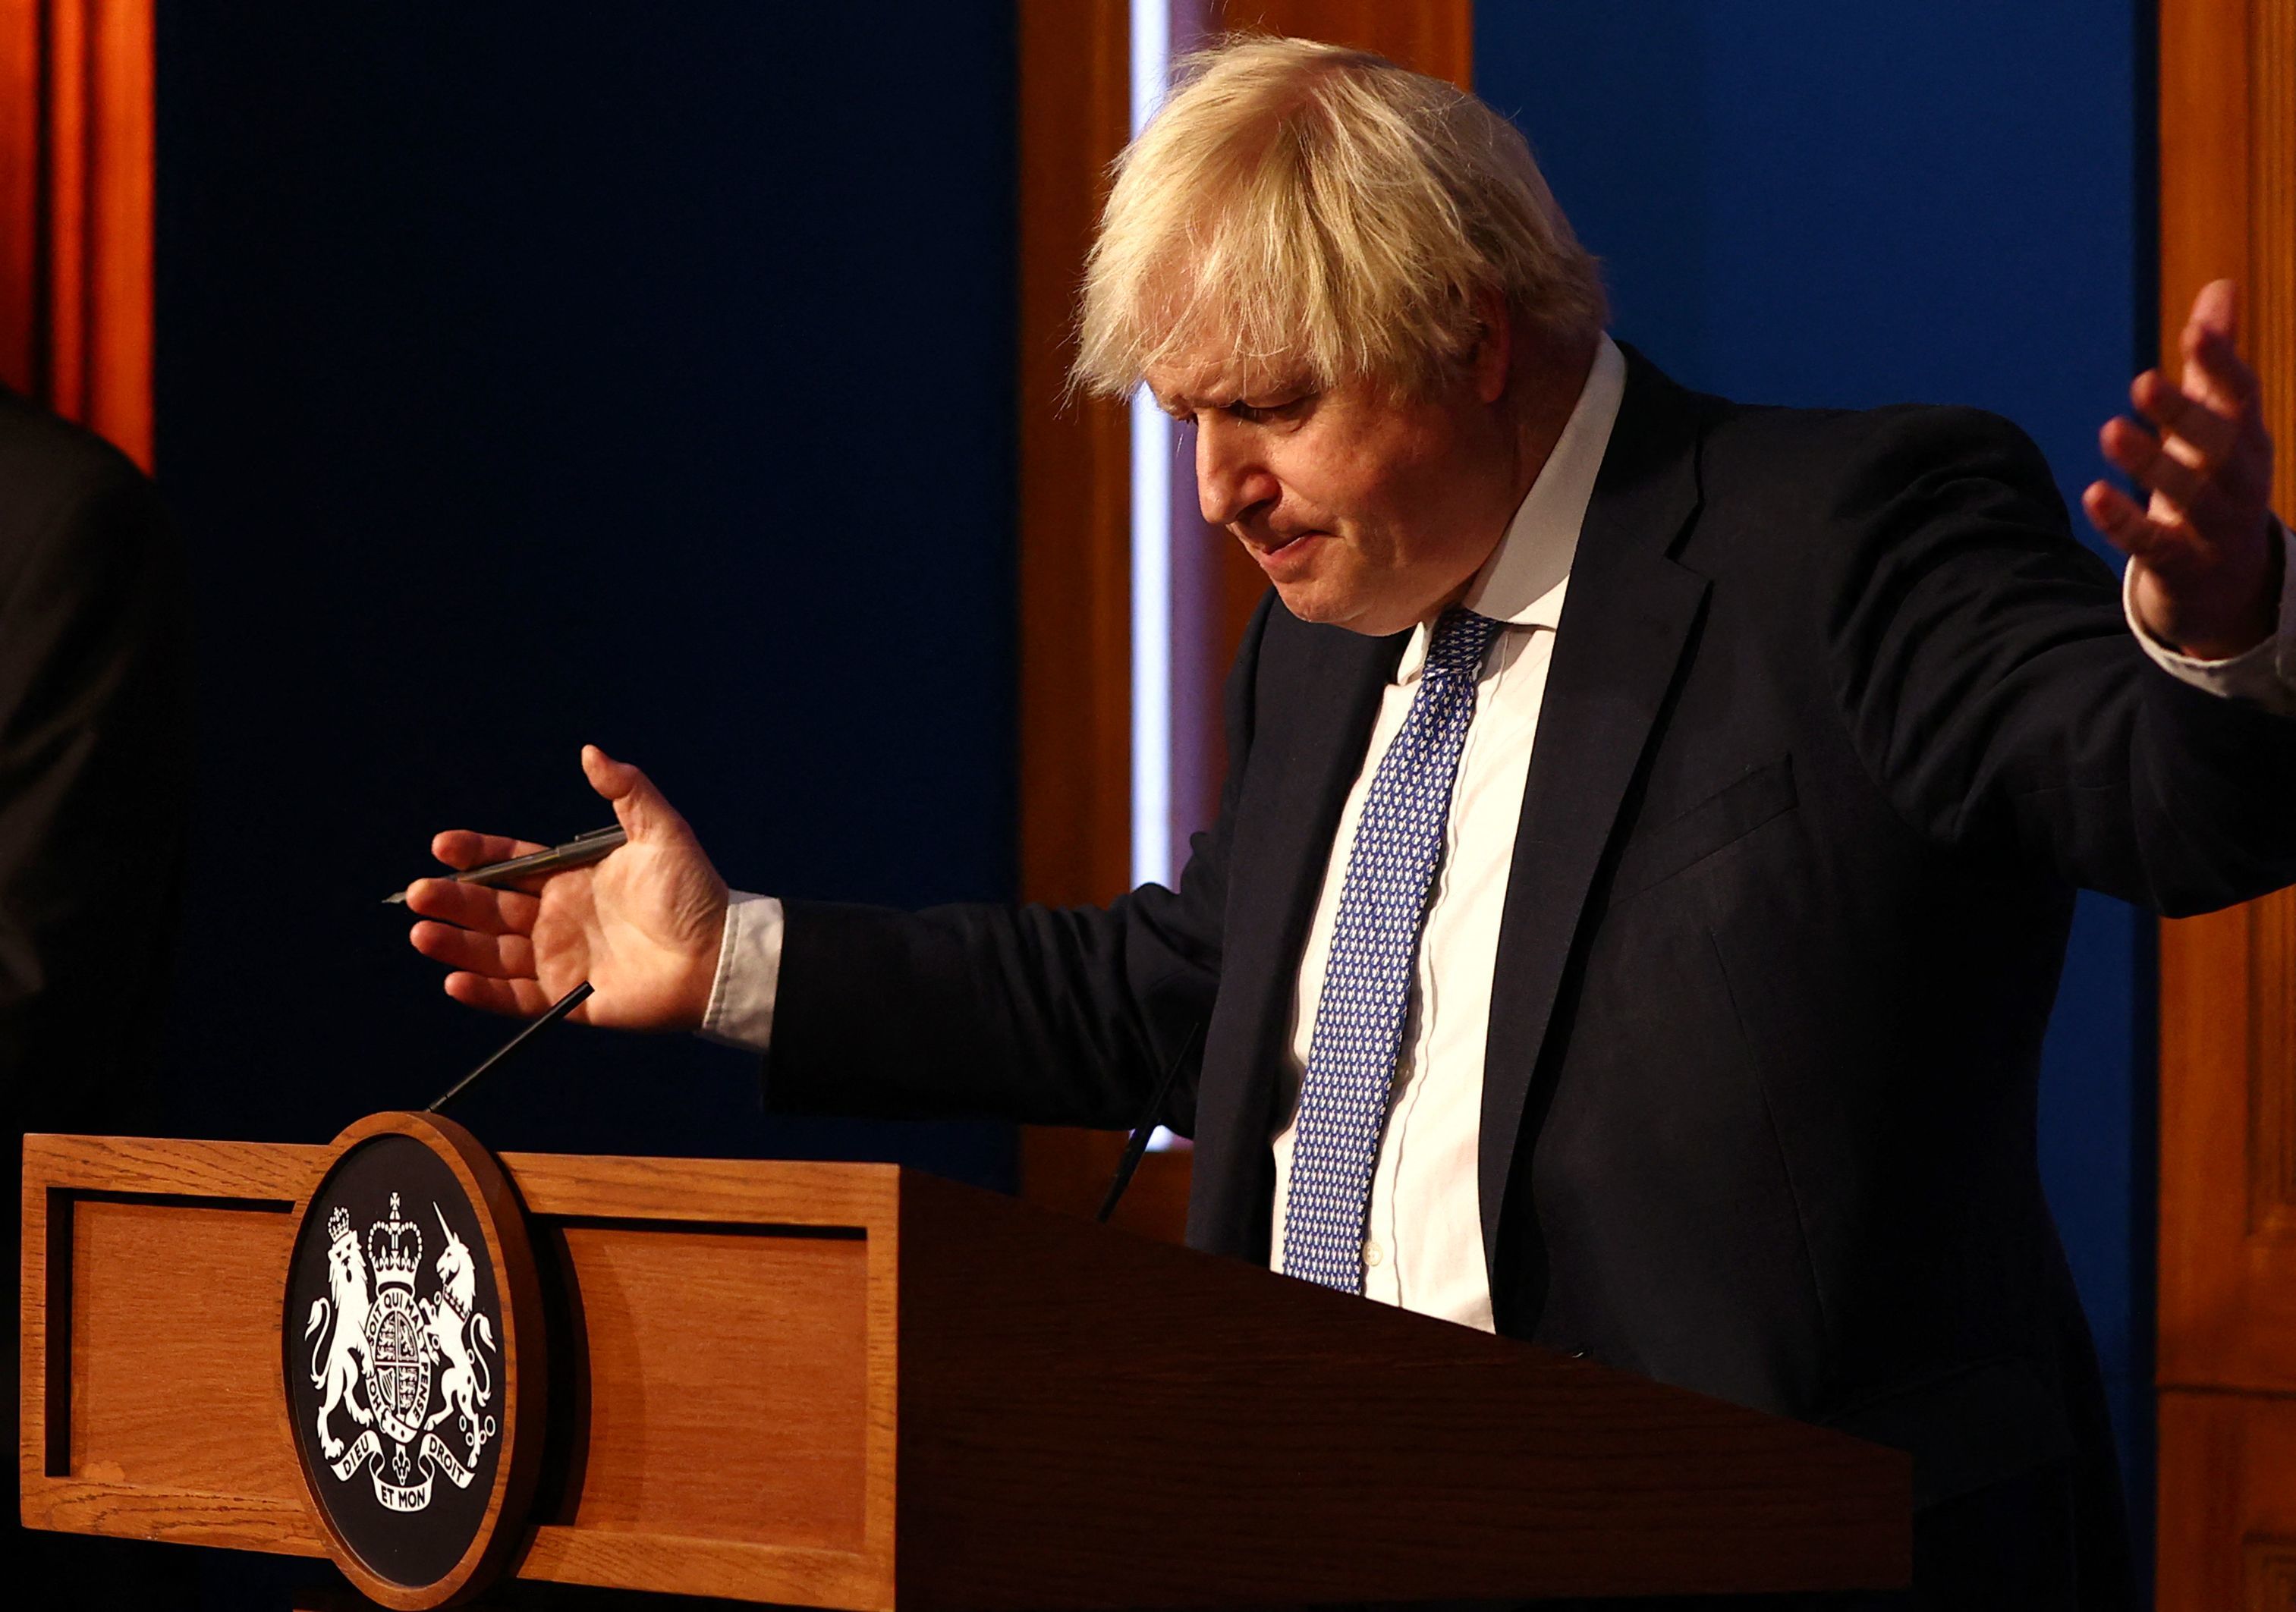 El primer ministro britnico, Boris Johnson.